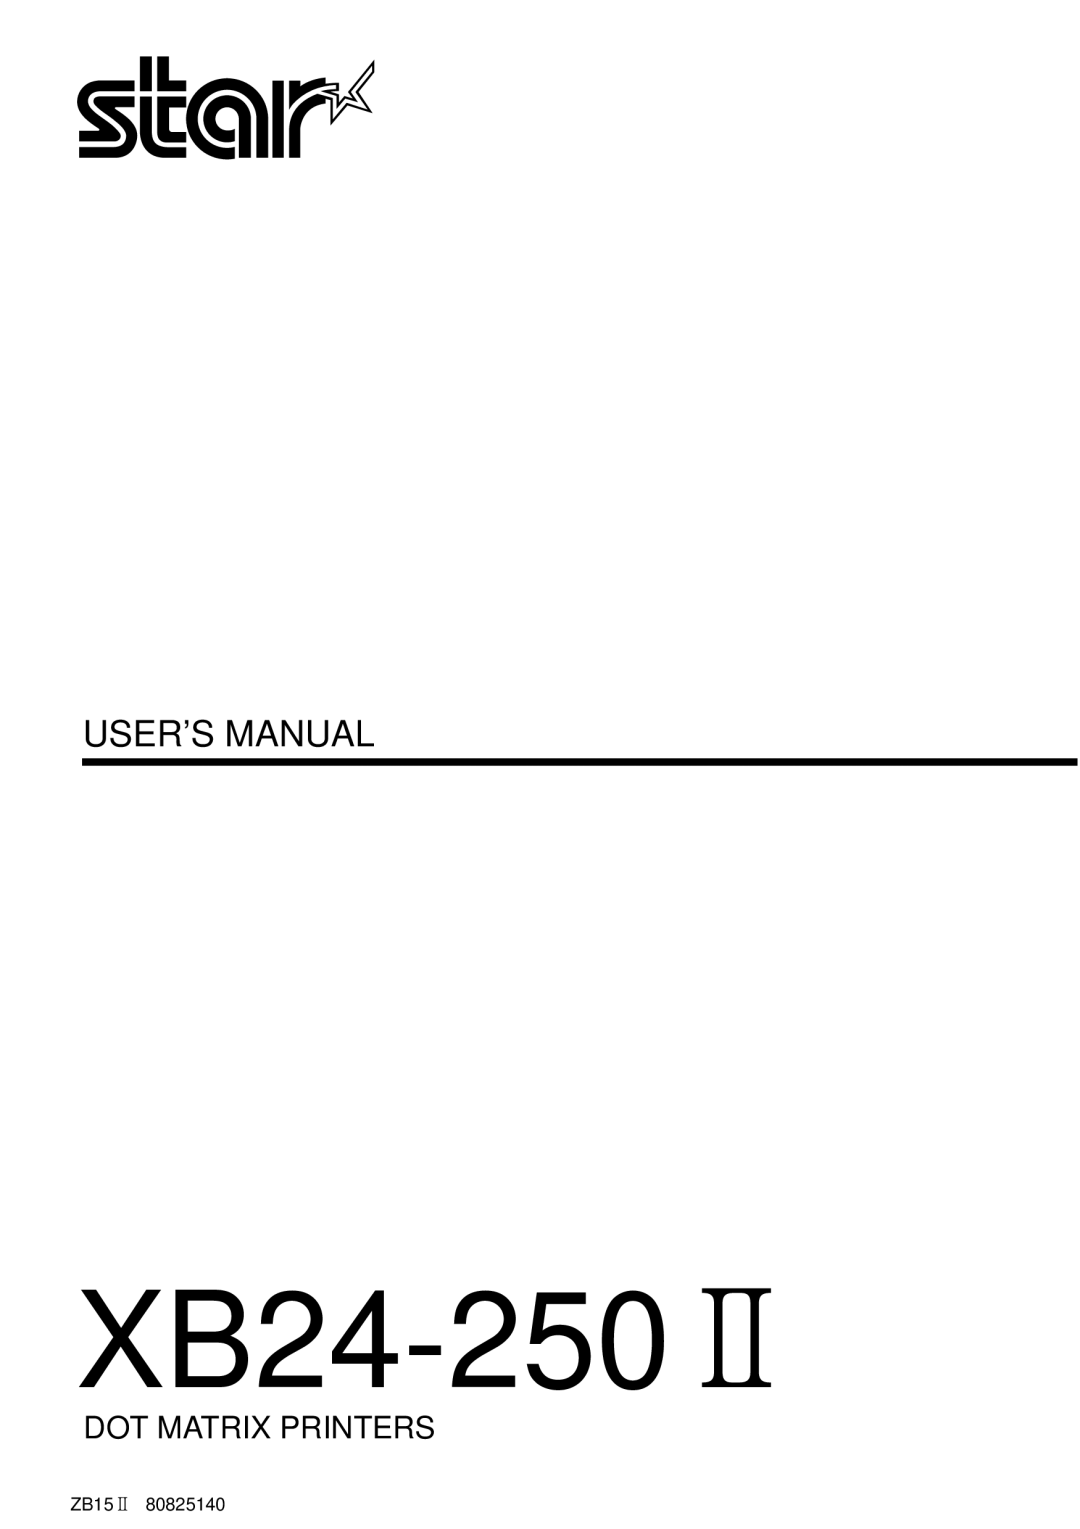 Star Micronics XB24-250 II user manual XB24-2502, User’S Manual, Dot Matrix Printers, ZB152 